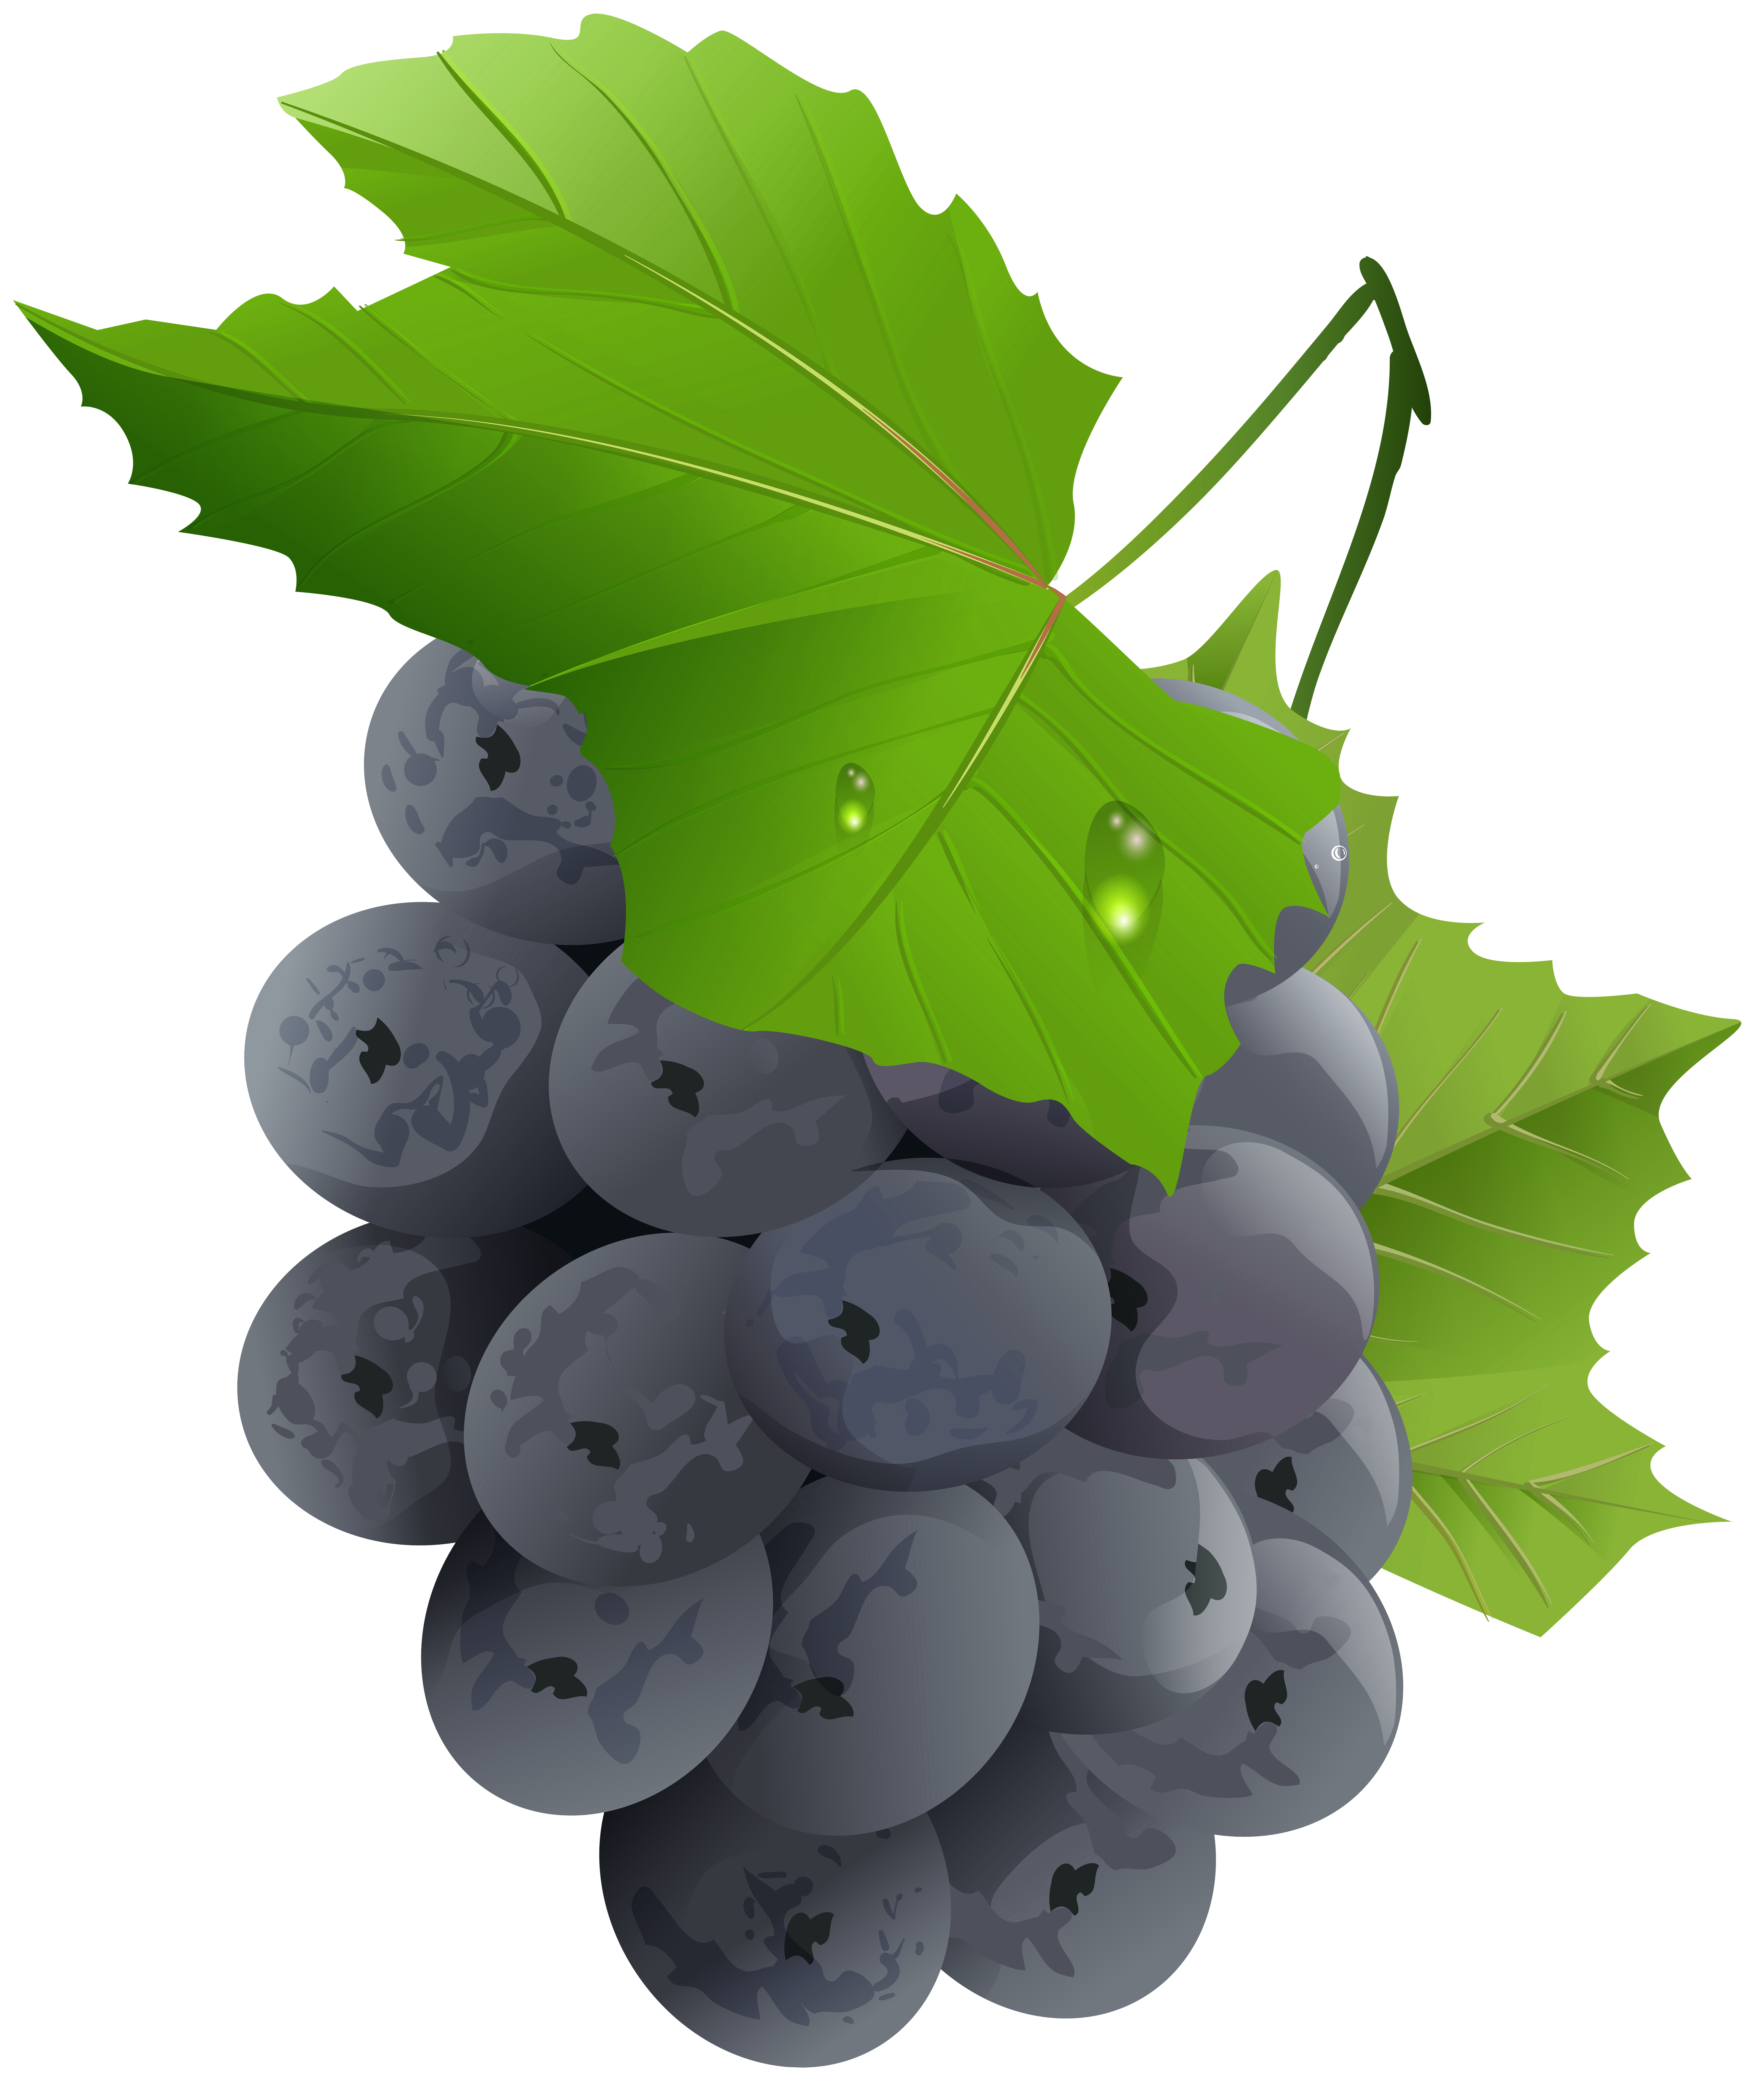 grapes clipart fruit vegetable